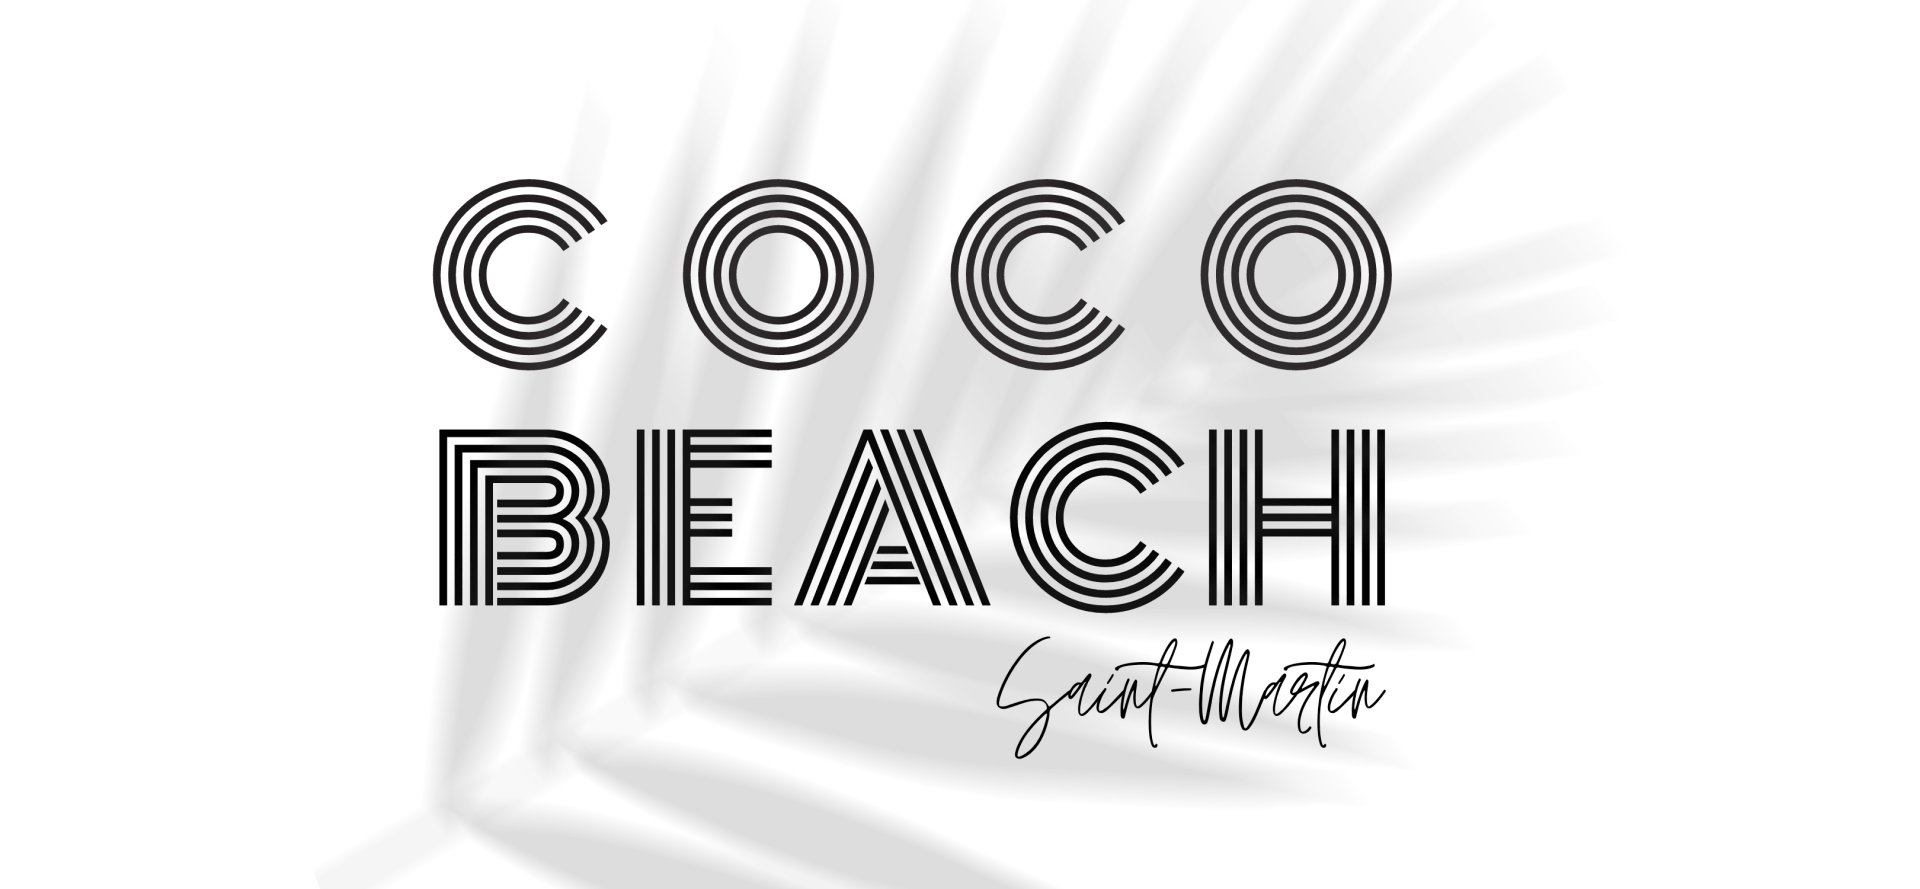 Welcome to Coco Beach restaurant in Orient Beach